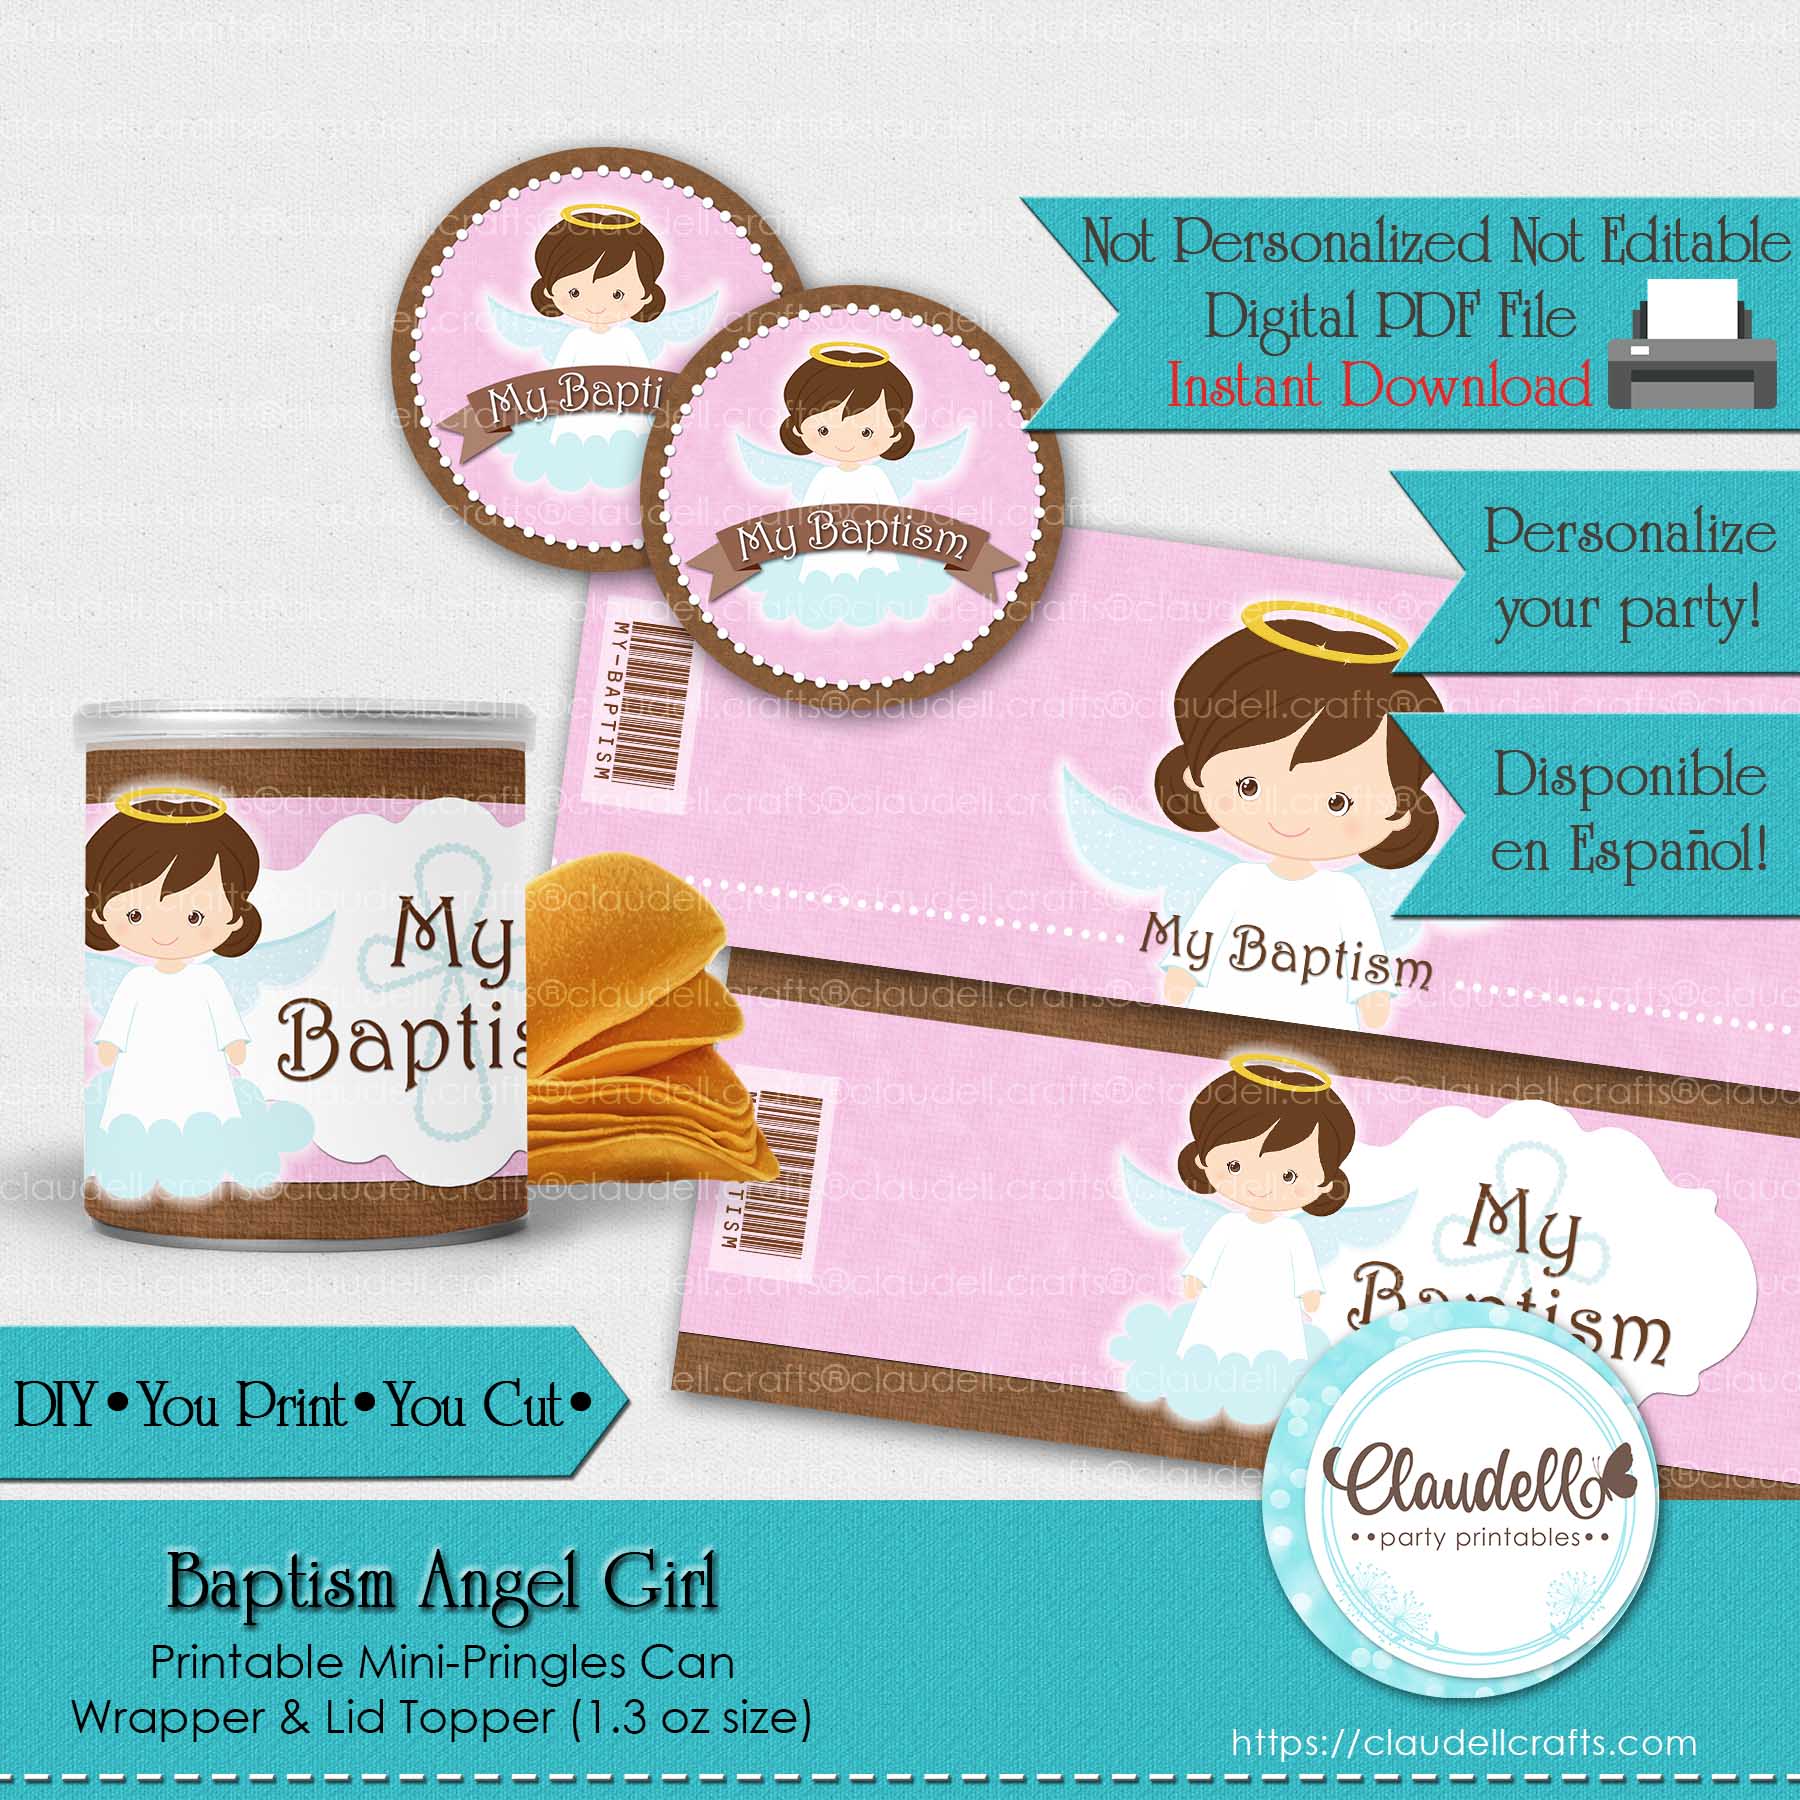 Baptism Angel Girl Mini Pringles Wrapper & Lid Topper, Baptism Girl Favors Can, Etiqueta Bautizo Niña, Baptism Personalized Labels, Baptism Party Favors, Event Favors/Digital File Only